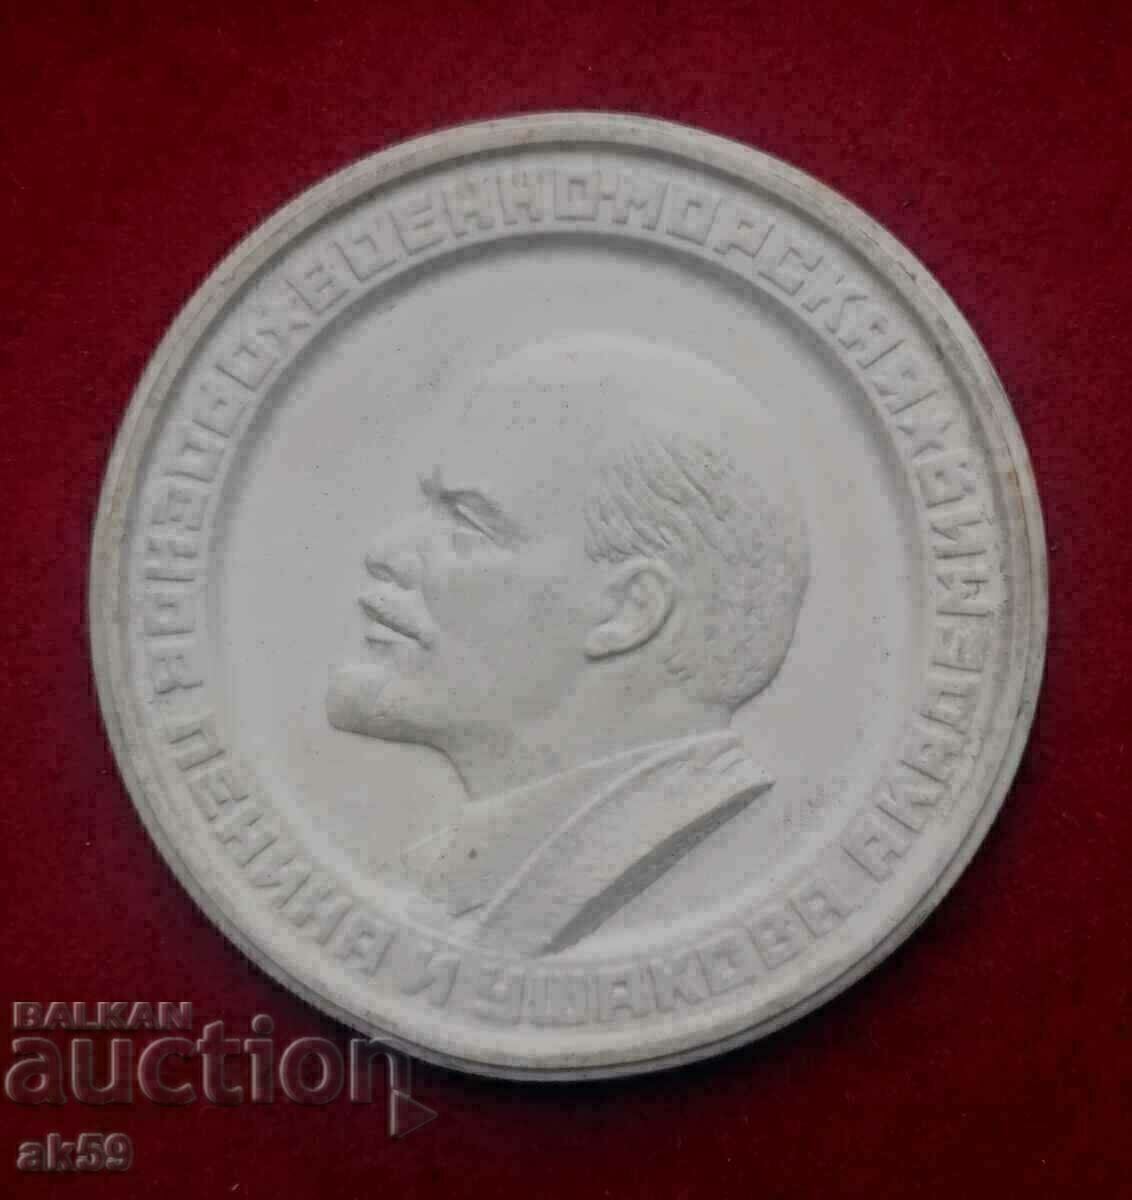 Porcelain medal plaque - "Lenin".